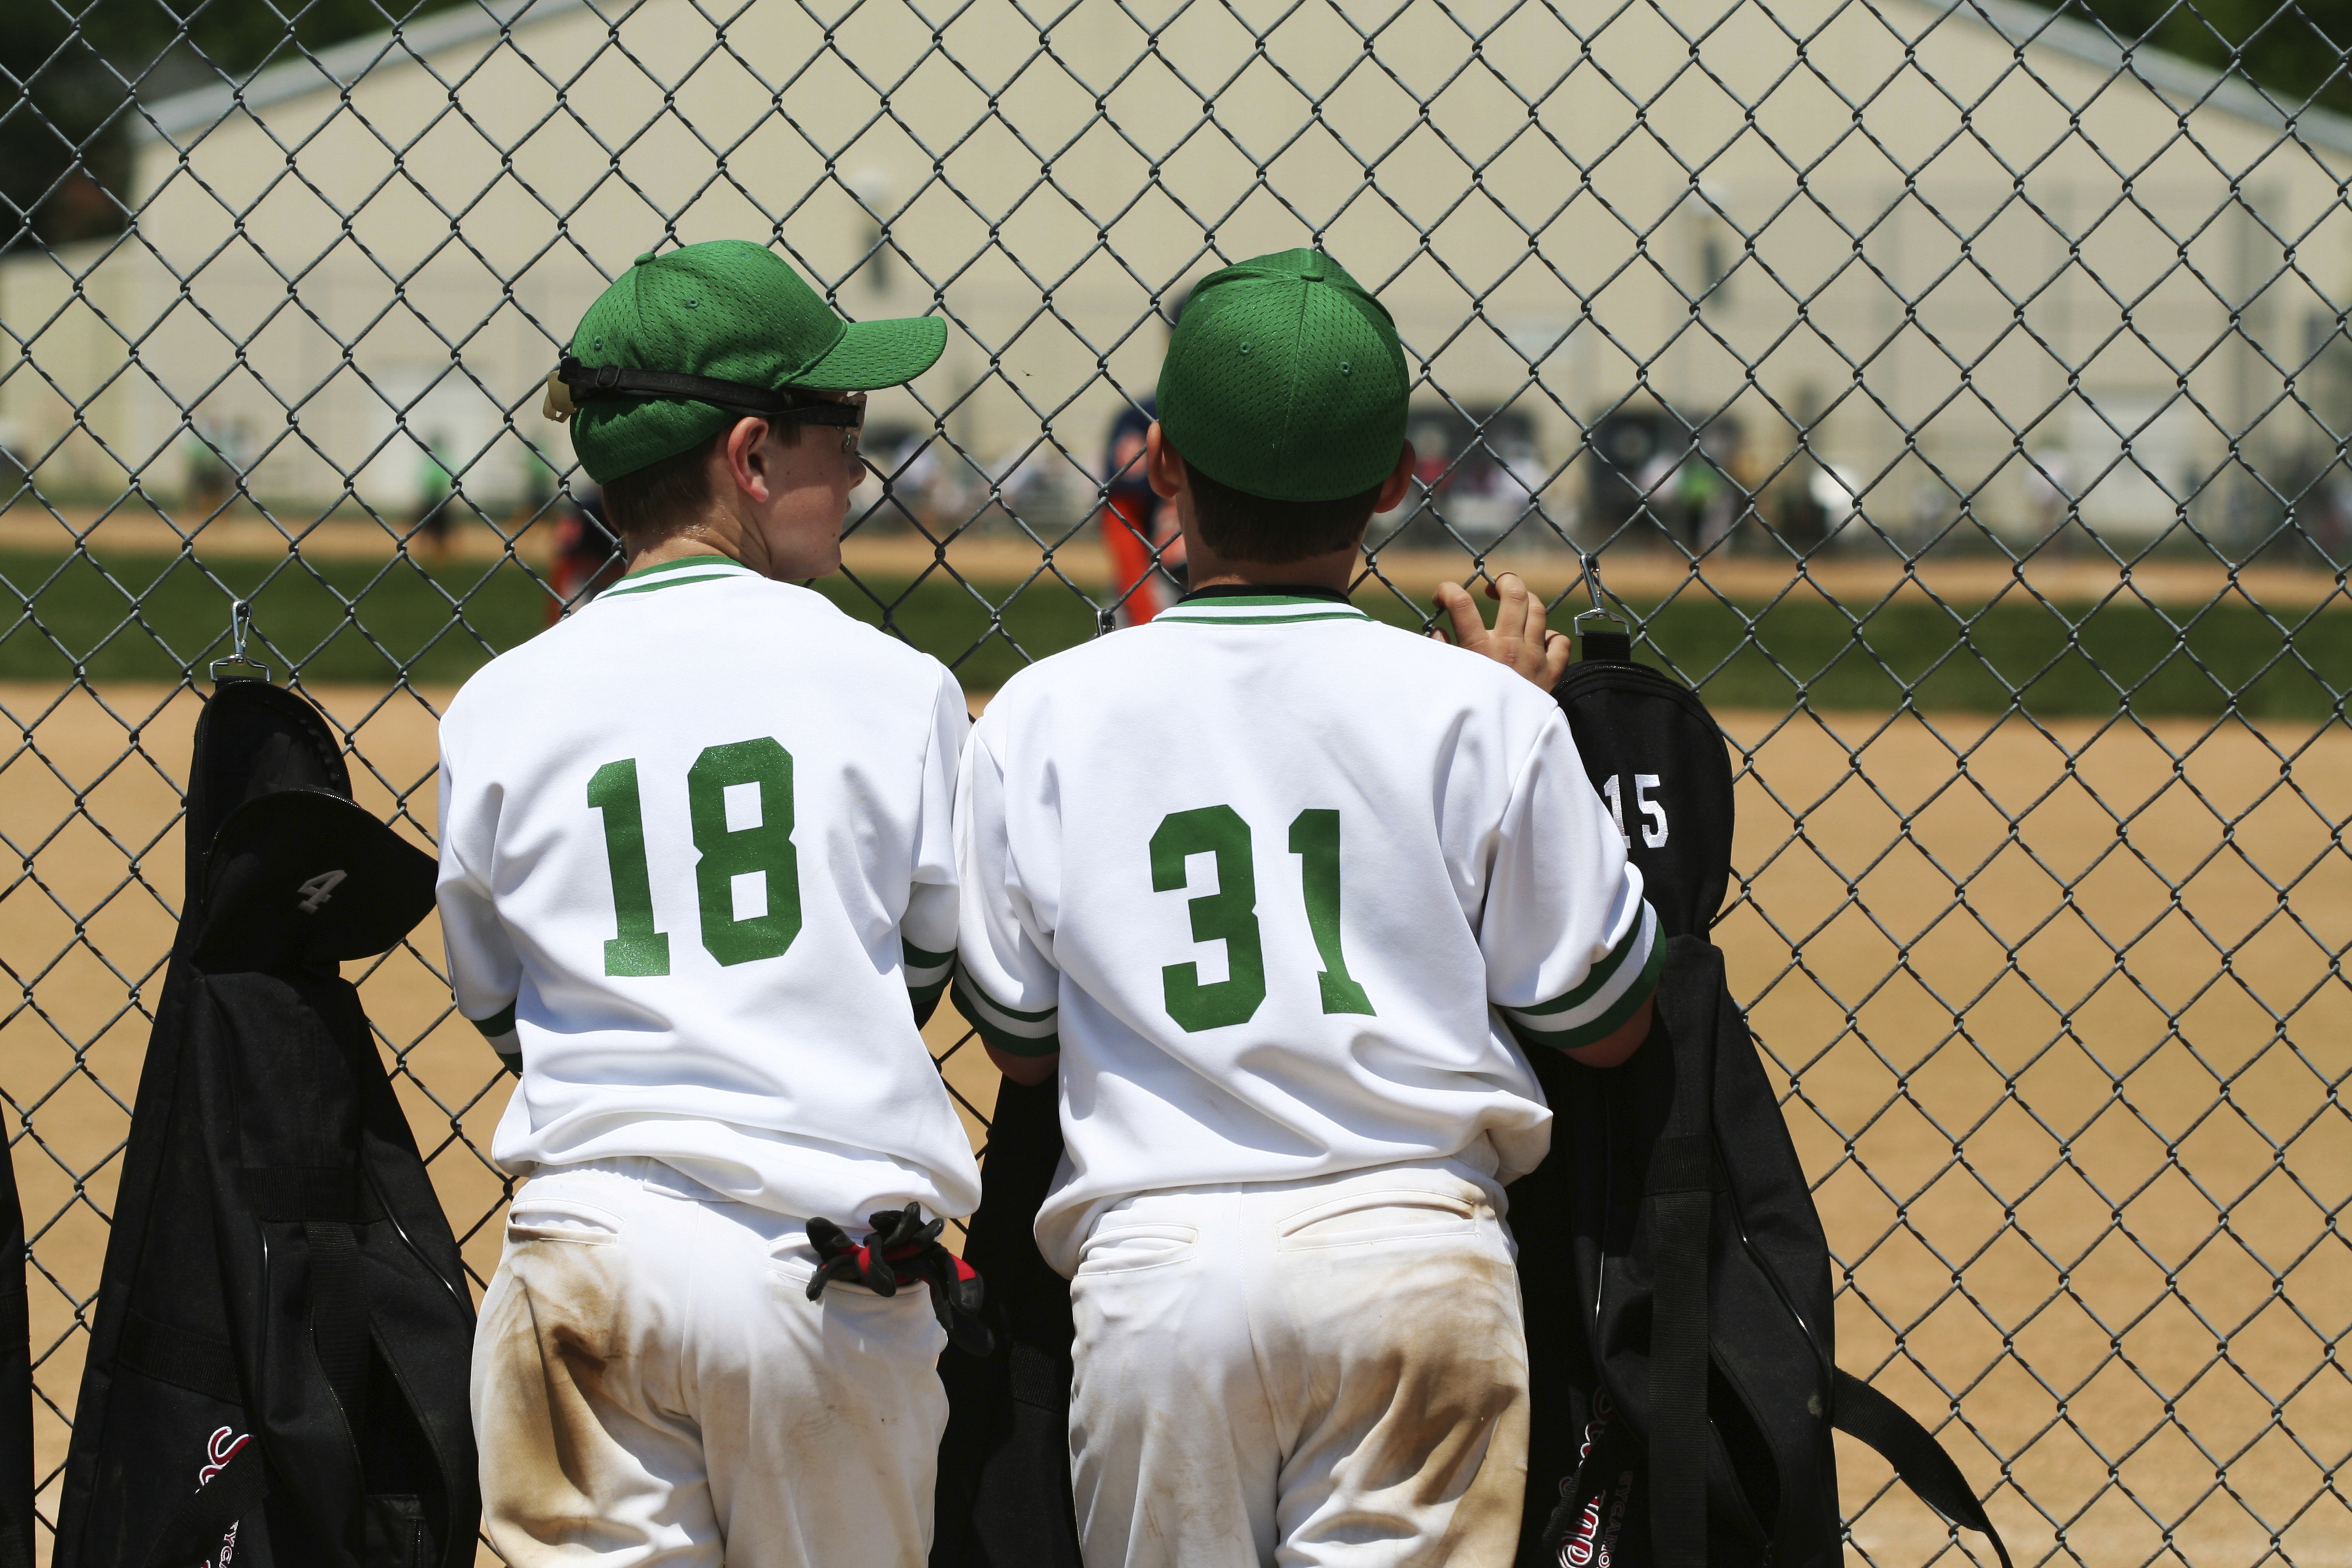 kids baseball uniforms